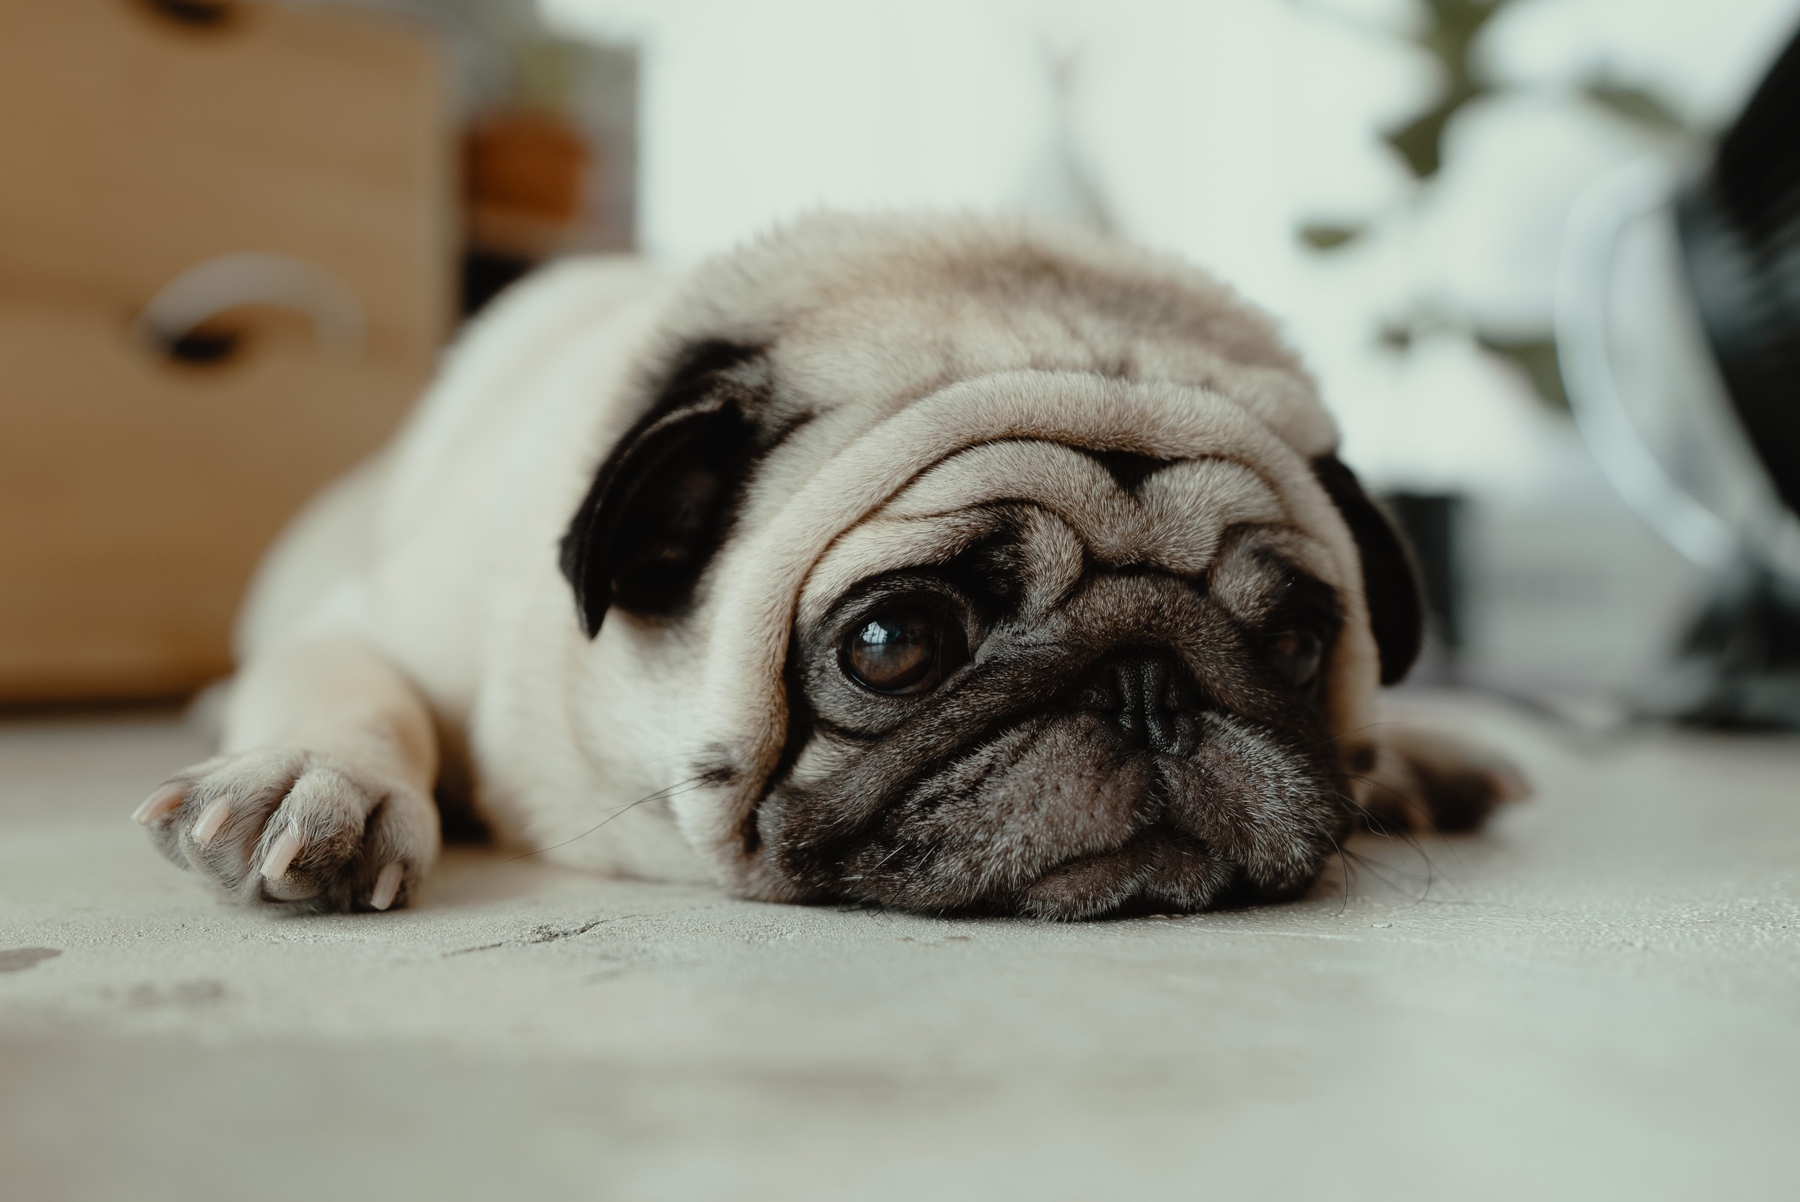 a sad looking pug laying on the floor